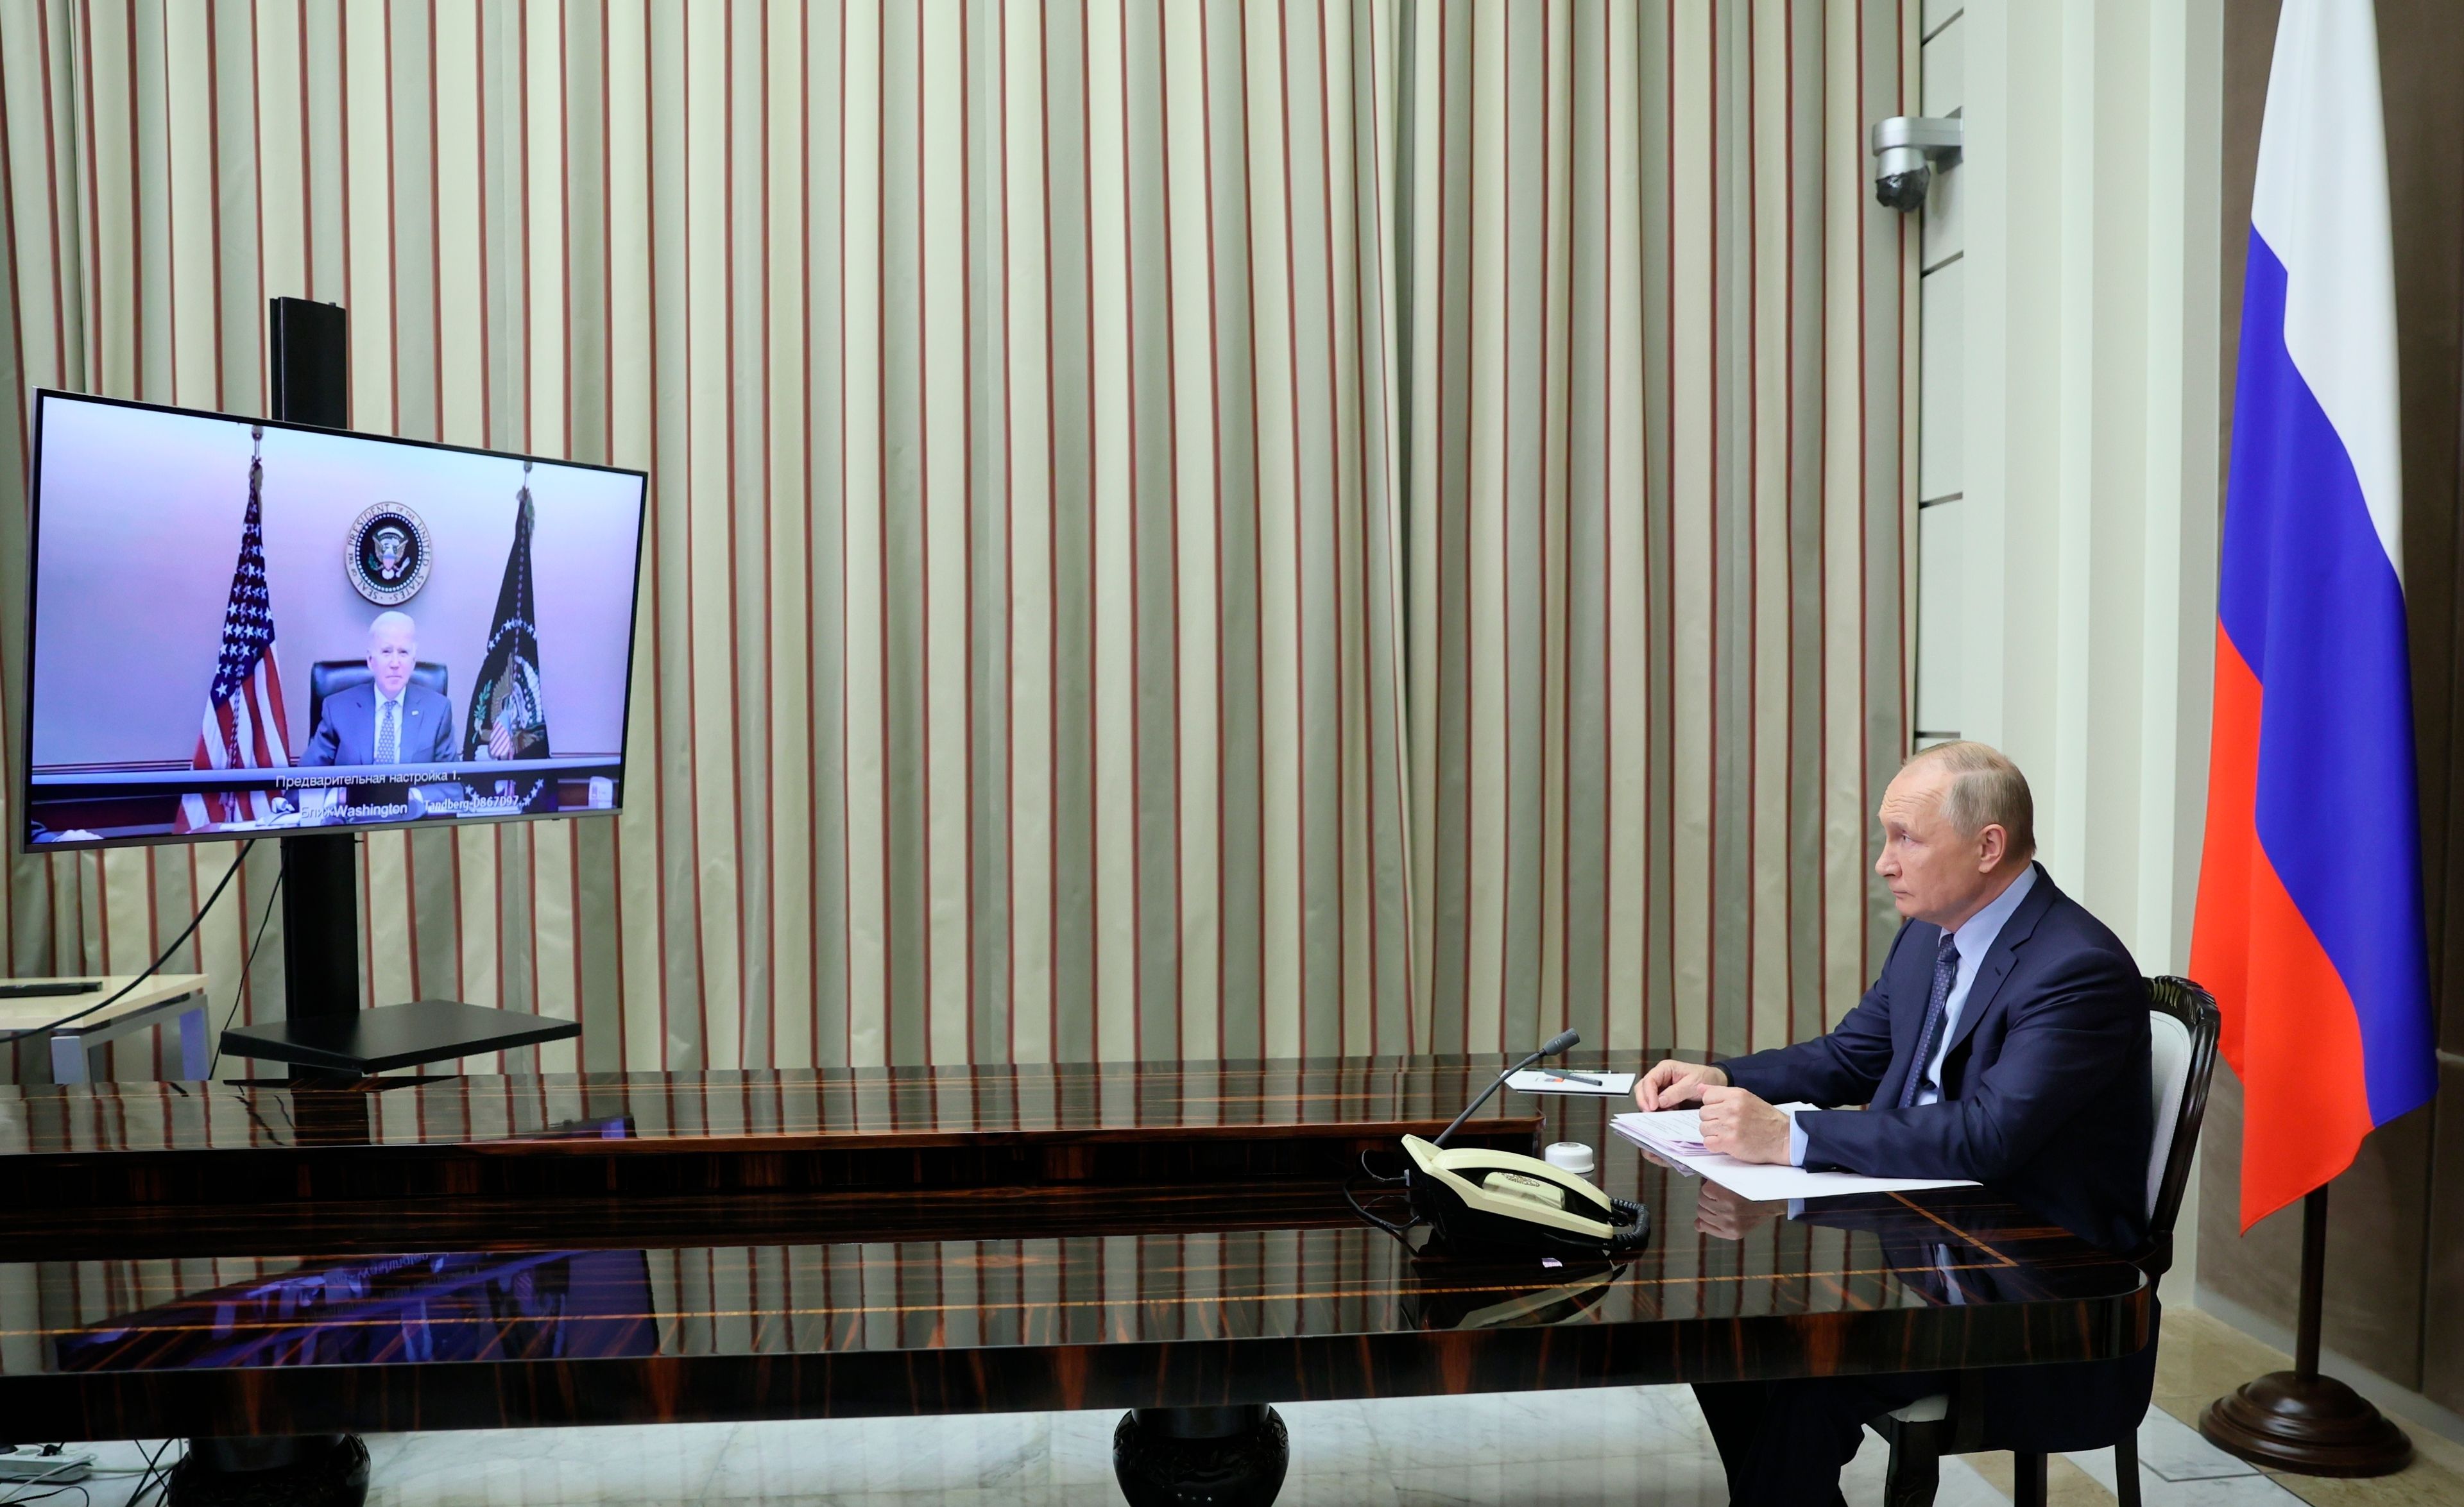 Putin is shown during his talks with Biden via videoconference in the Bocharov Ruchei residence in the Black Sea resort of Sochi, Russia, on Dec. 7, 2021 (CP/Mikhail Metzel, Sputnik, Kremlin Pool Photo via AP)